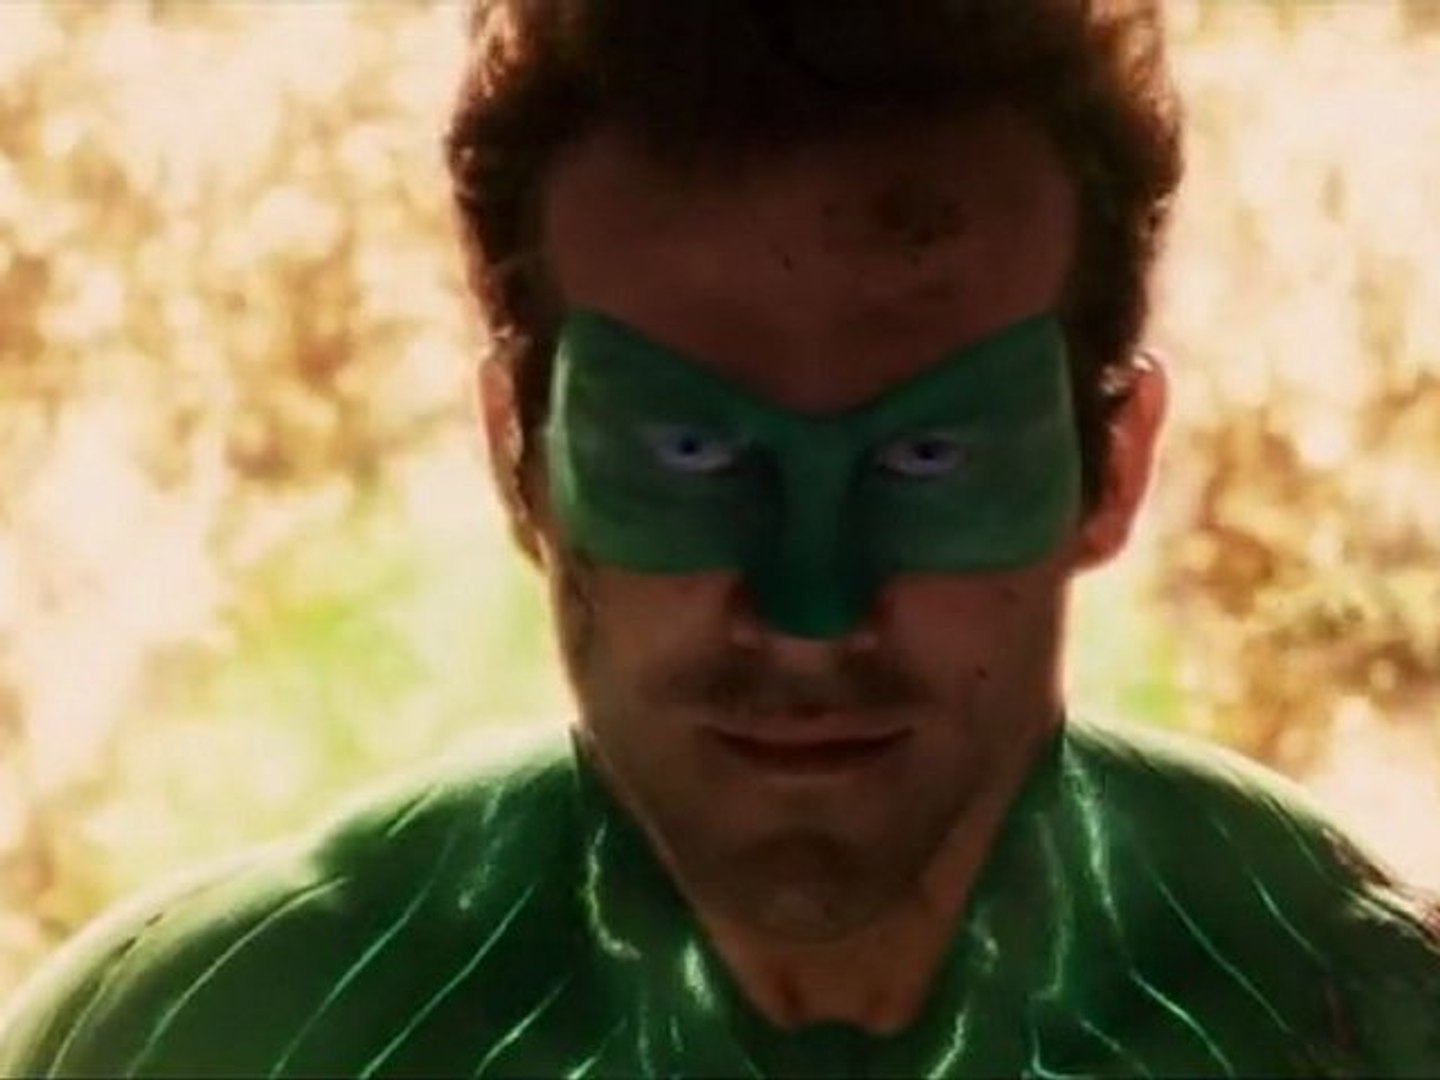 Green Lantern (Linterna Verde) - Trailer 2 en español HD - Vídeo Dailymotion